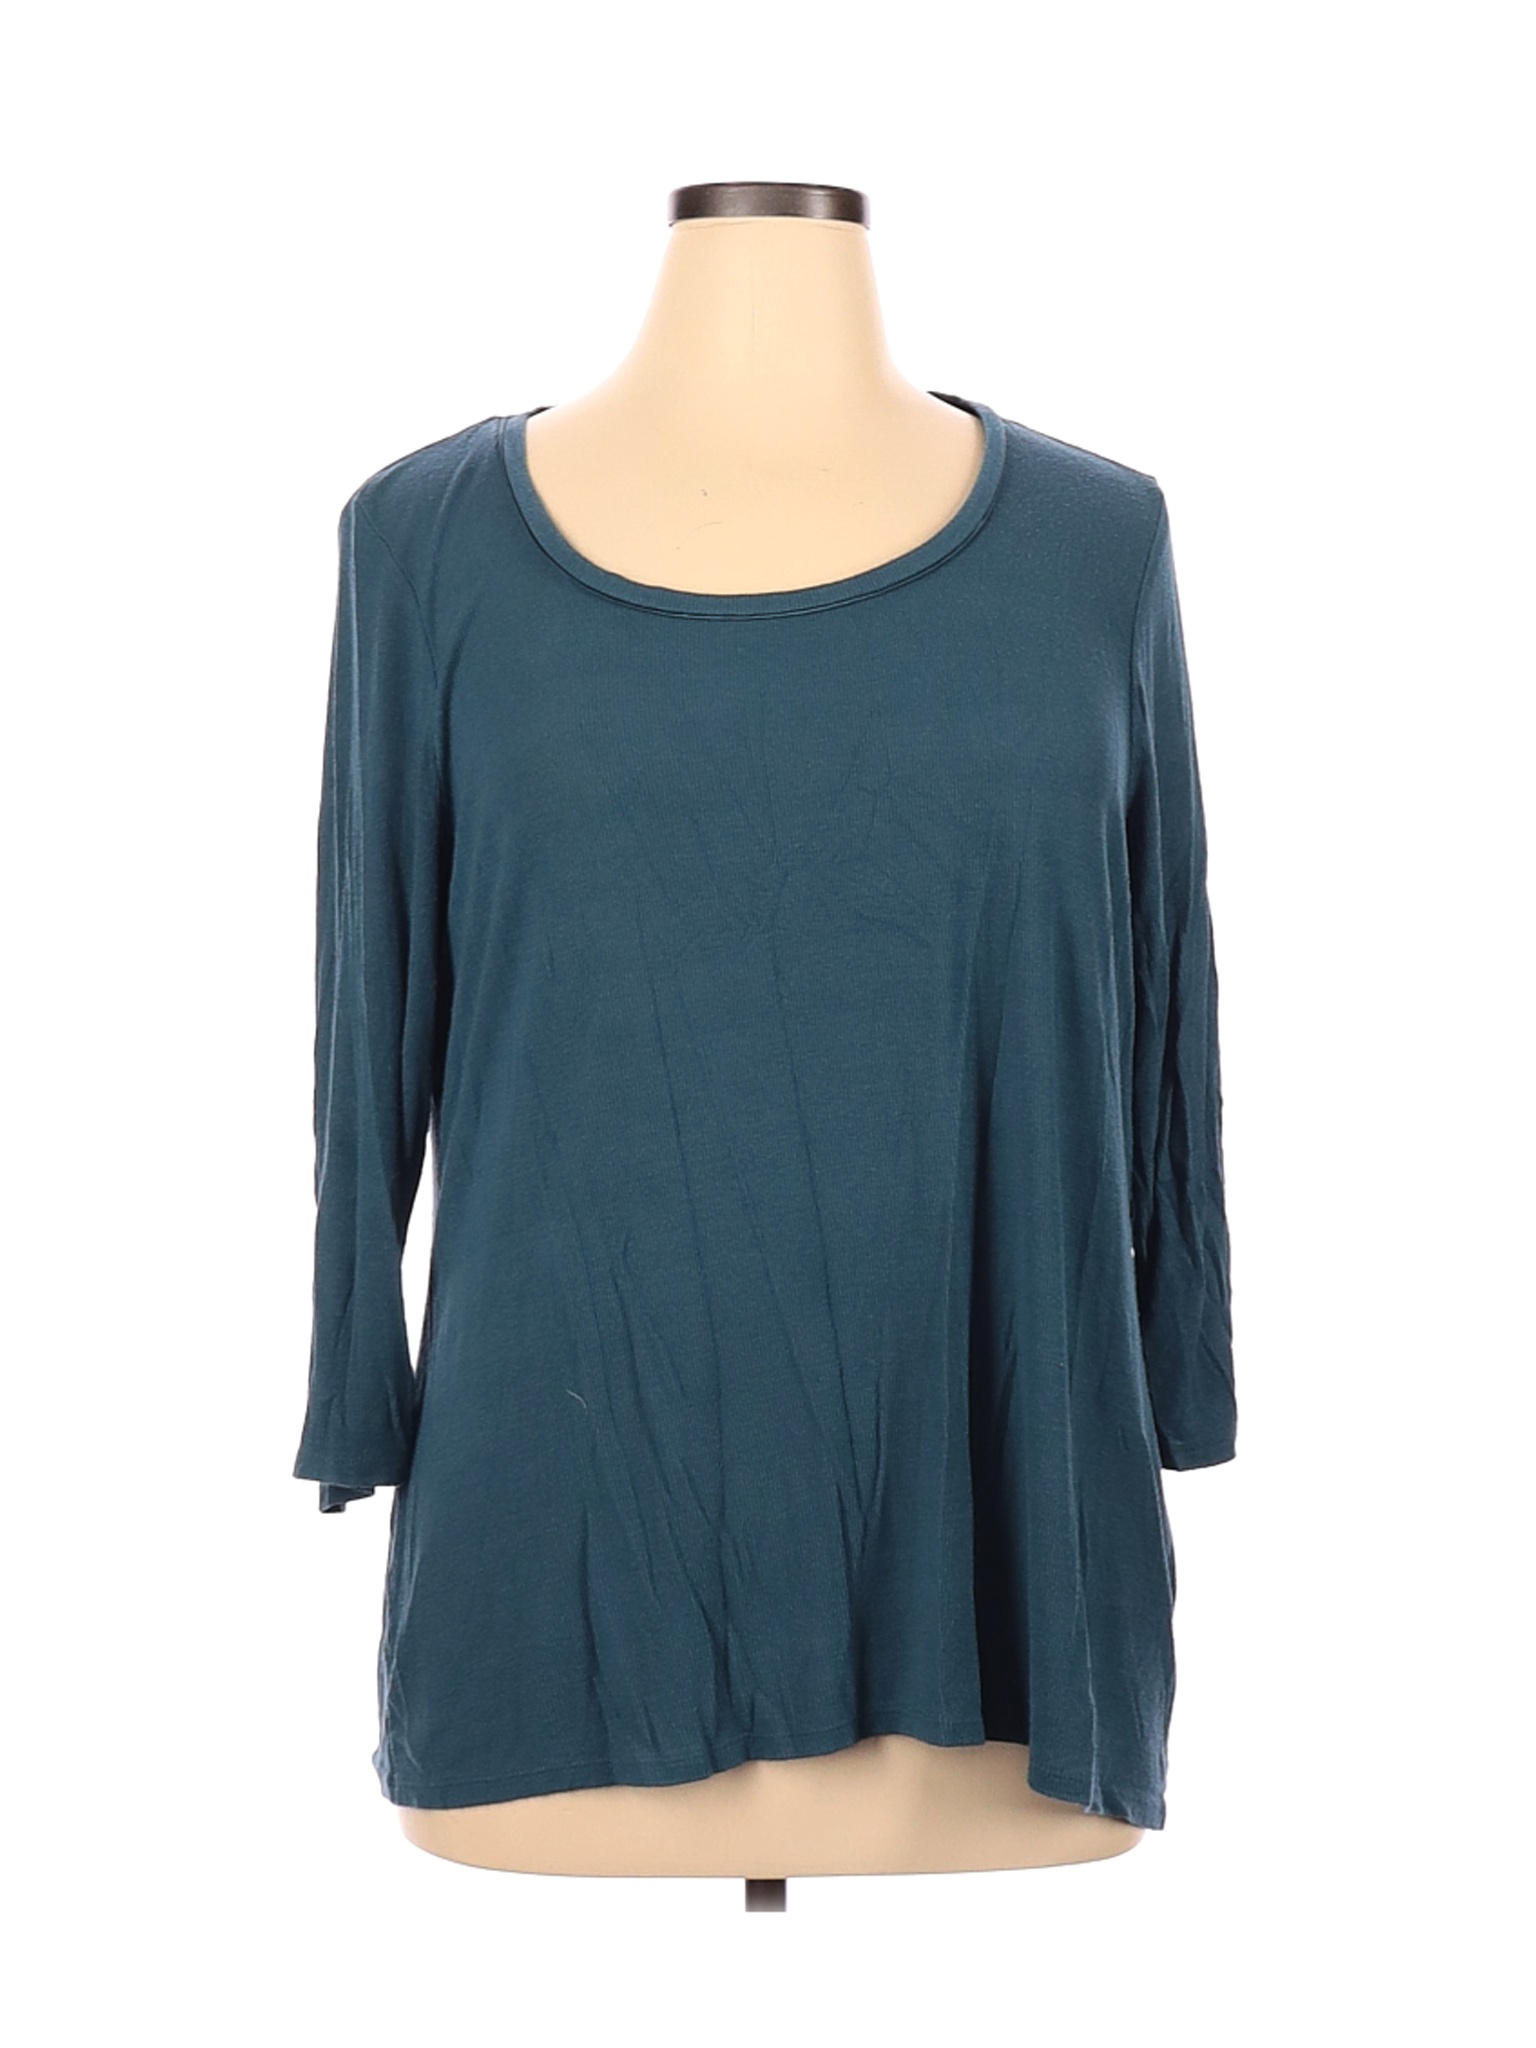 Simply Vera Vera Wang Women Green Long Sleeve T-Shirt XL | eBay